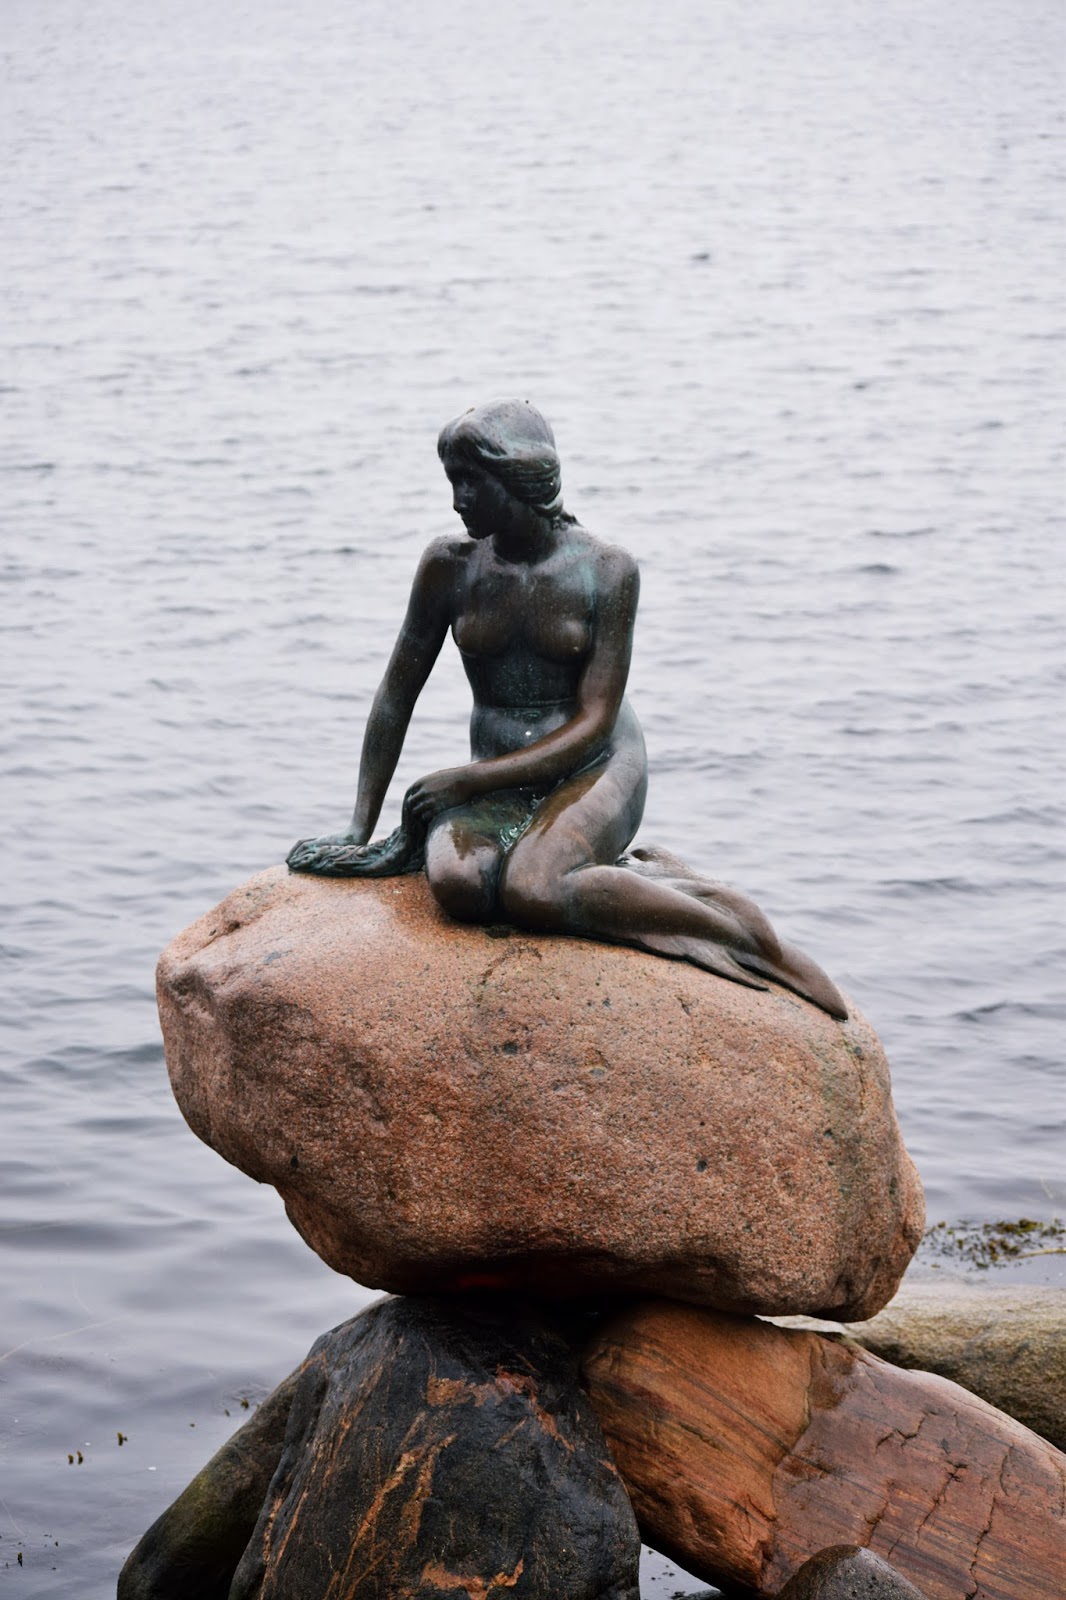 The Little Mermaid Statue, Copenhagen